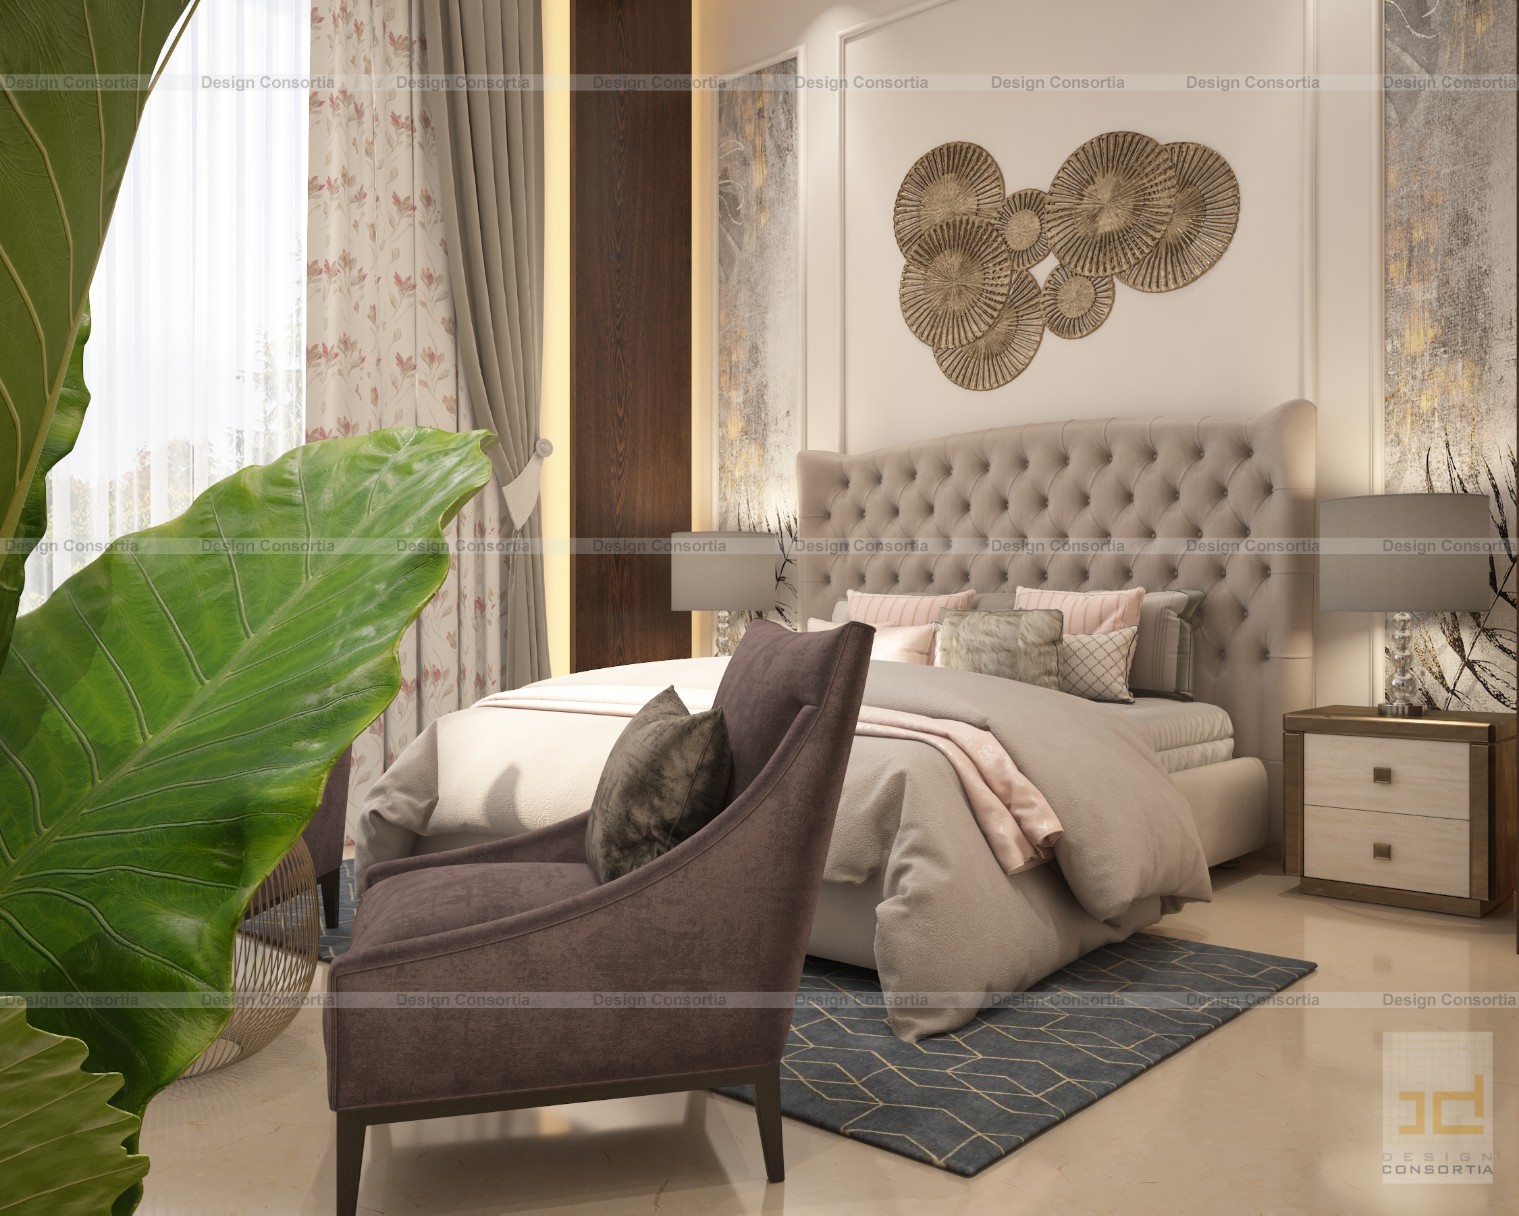 https://www.designconsortia.com/wp-content/uploads/2015/09/2nd-floor-master-bedroom-6-logo.jpg